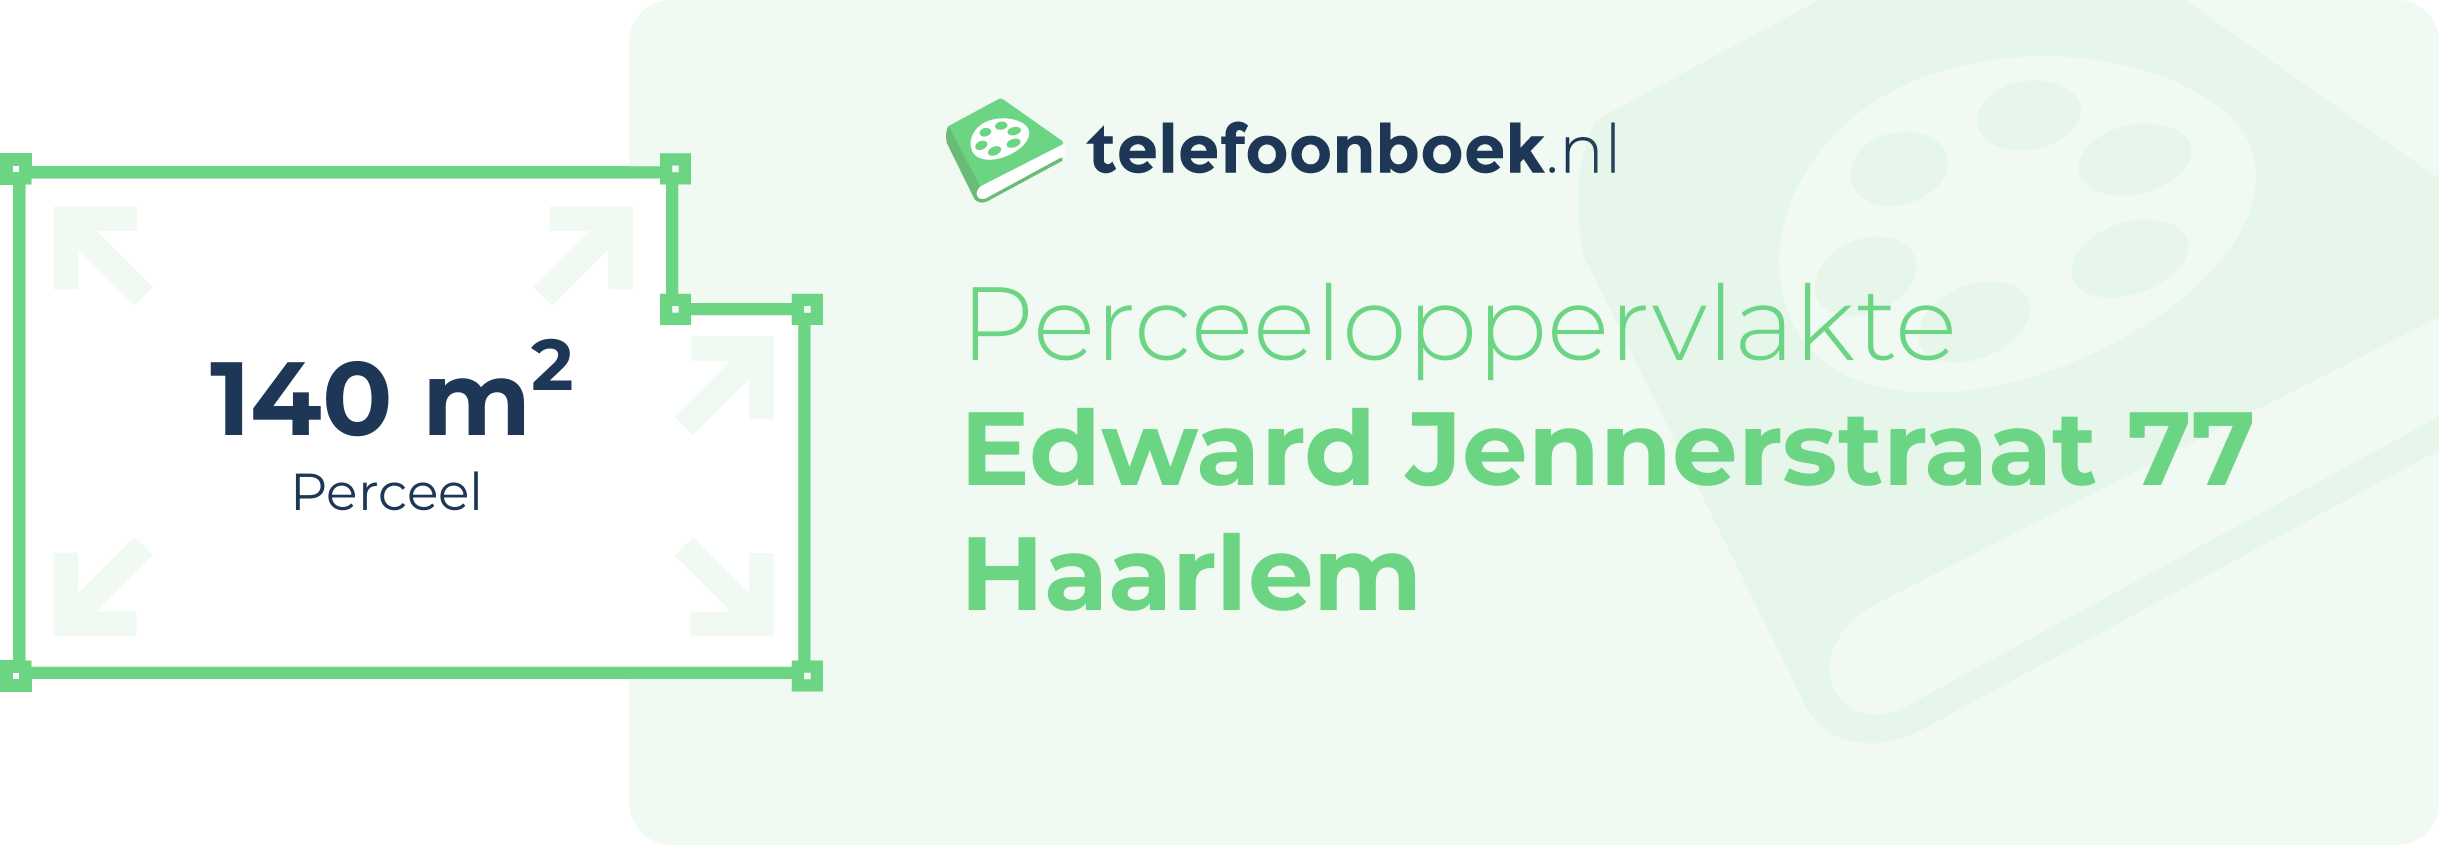 Perceeloppervlakte Edward Jennerstraat 77 Haarlem